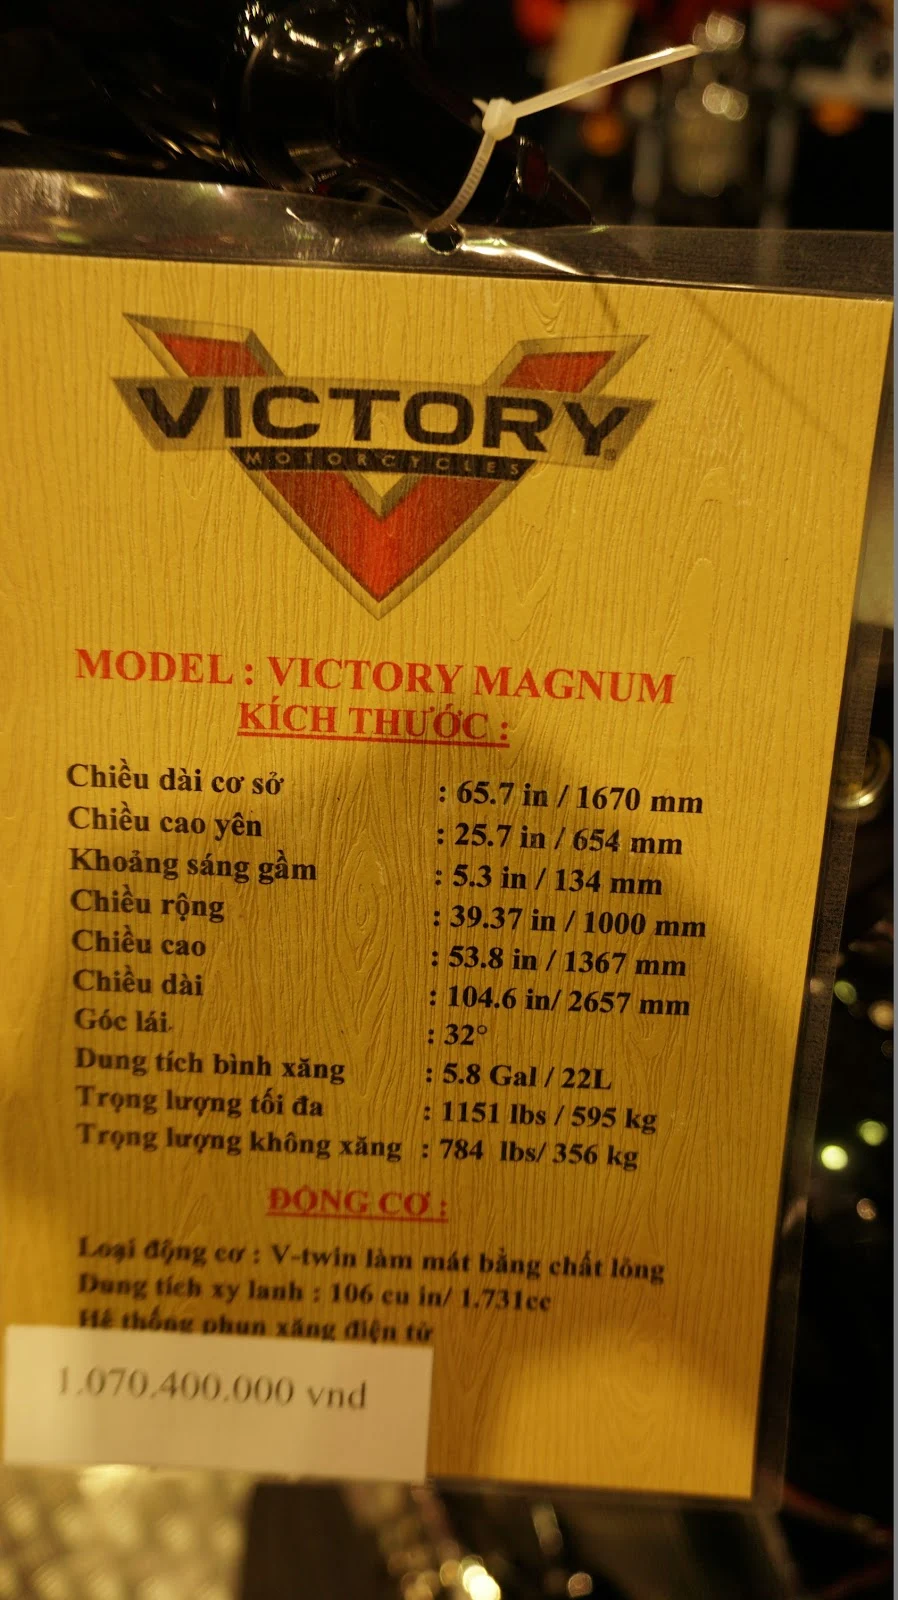 Victory Magnum